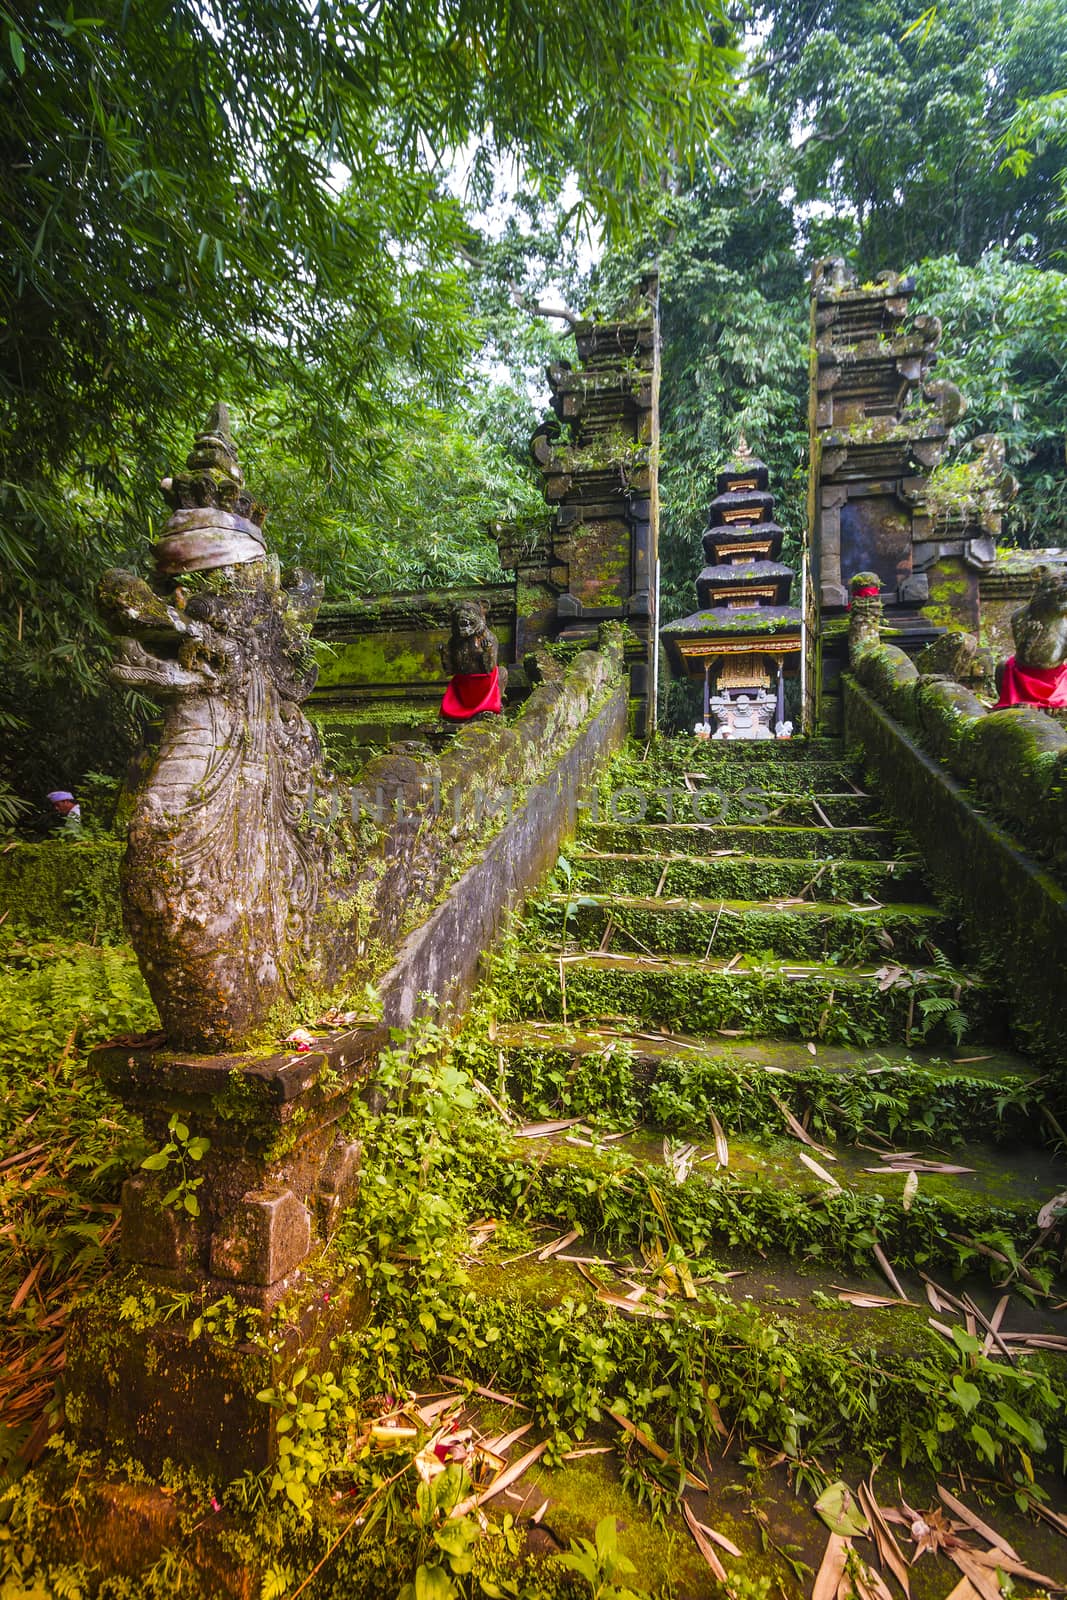 Traditional Hindu Bali Temple in Jungle near Ubud Indonesia